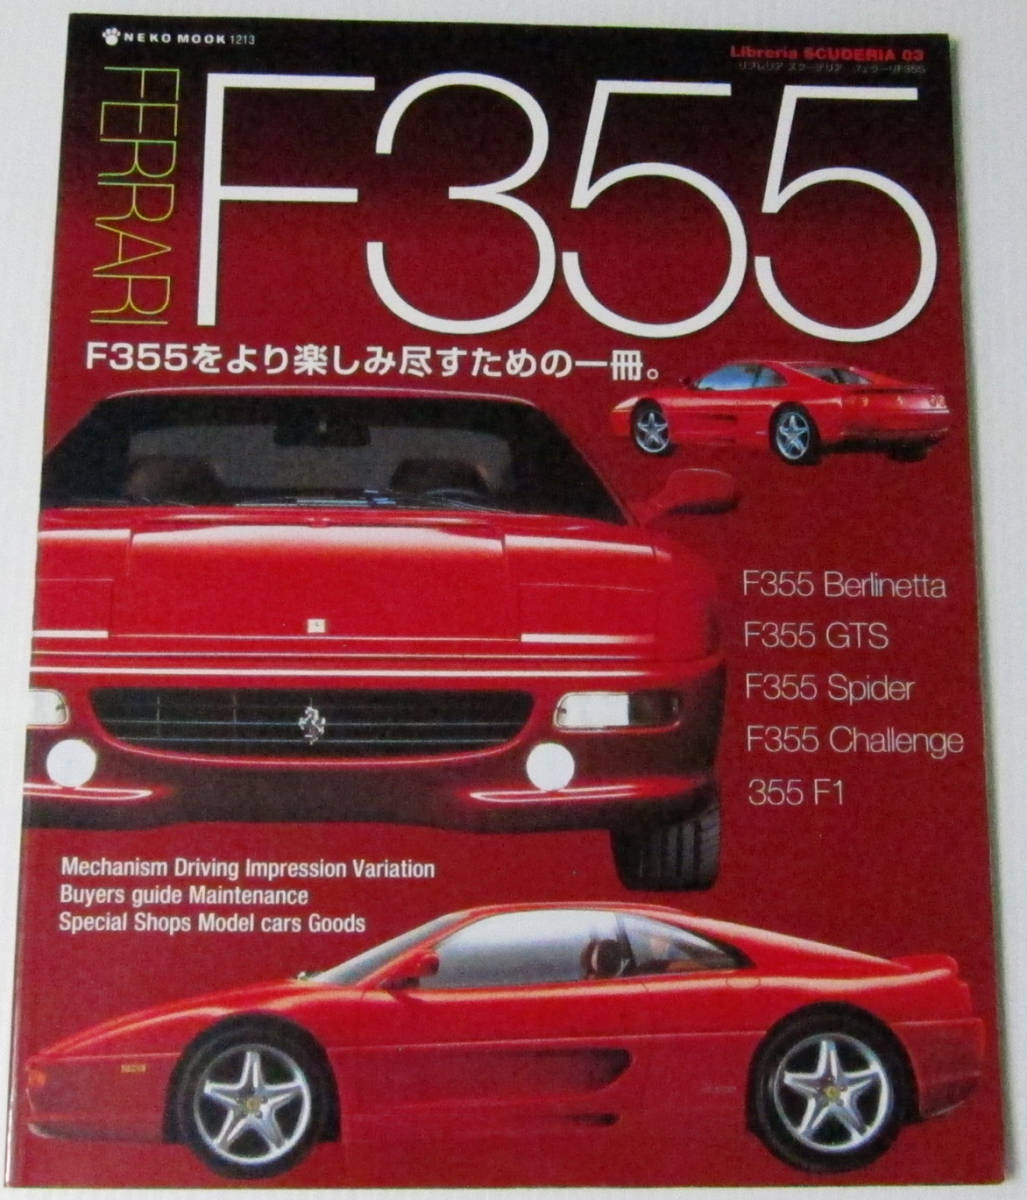 //FERRARI F355 フェラーリ/F355をより楽しみ尽すための一冊。/リブレリア スクーデリア 03 NEKO MOOK 1213 Libreria SCUDERIAの画像1